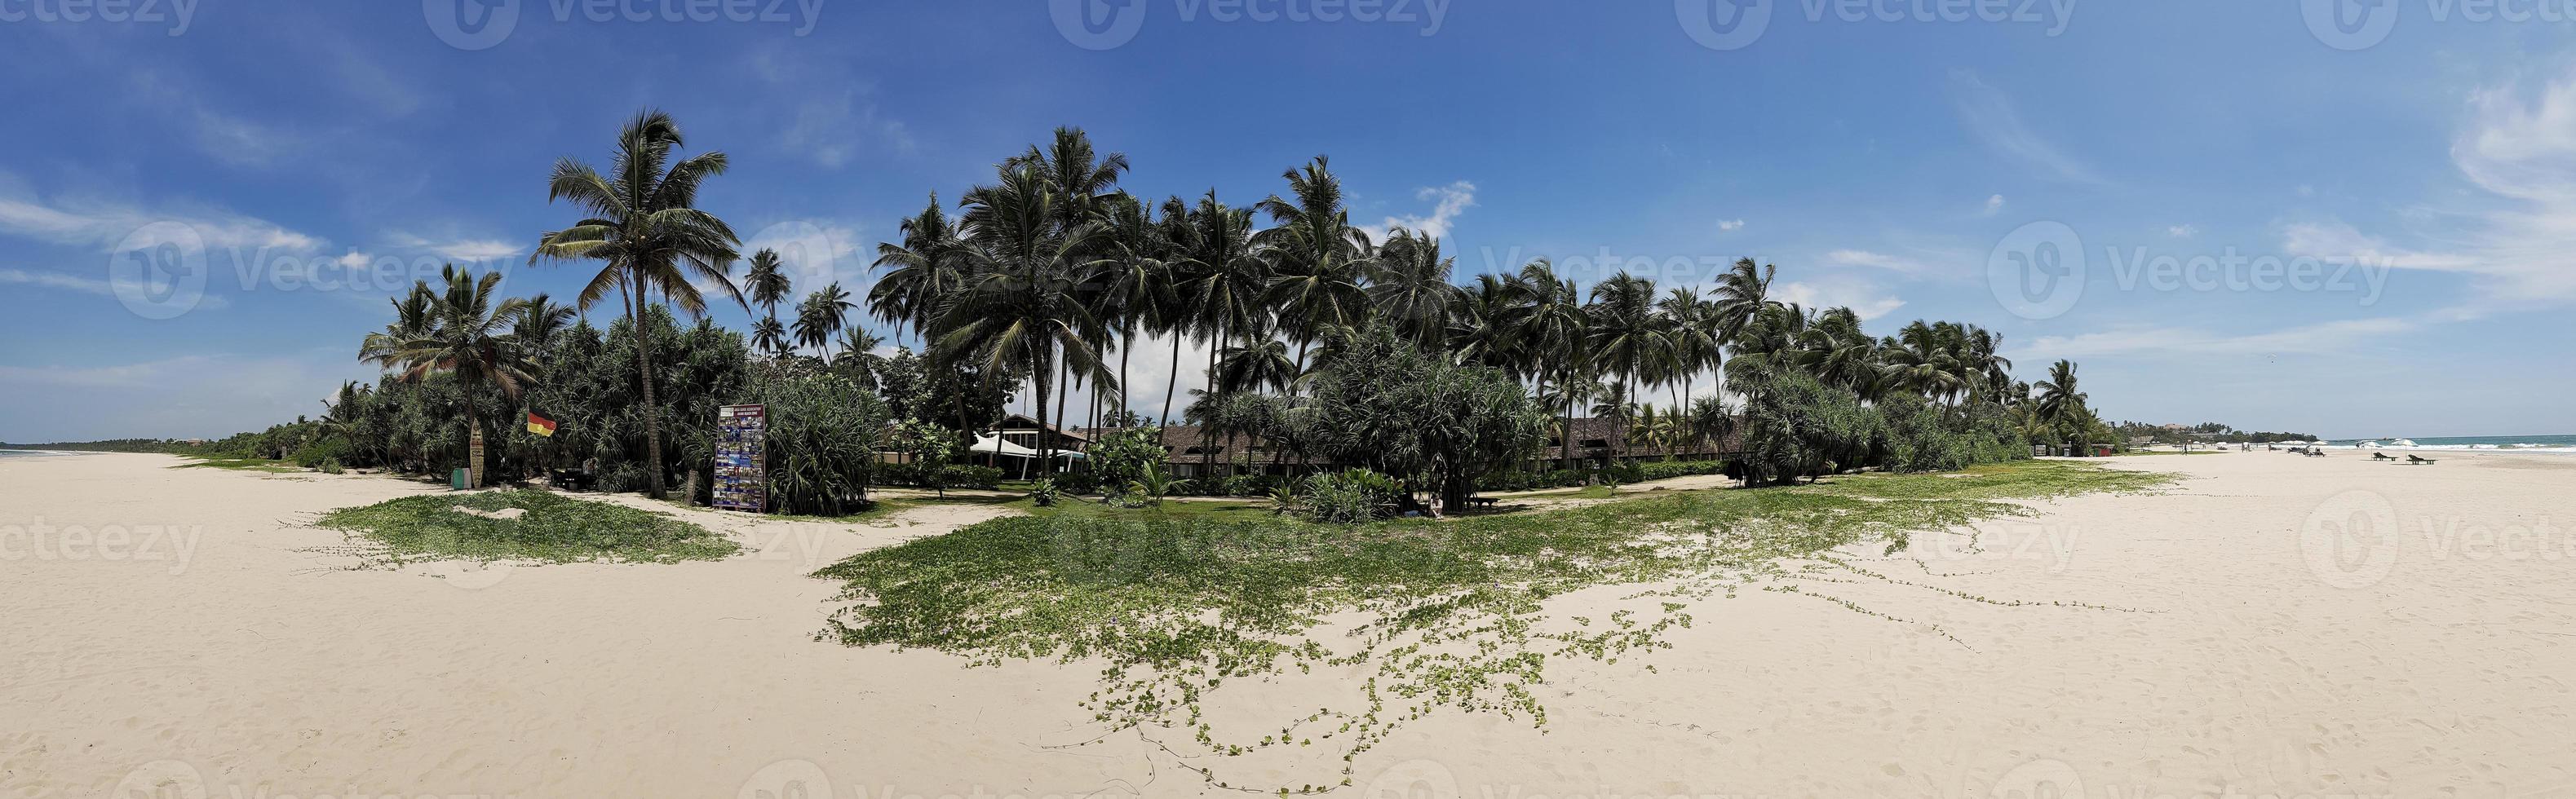 Panorama de la playa de Bentota en Sri Lanka, Asia. Playas más hermosas. foto